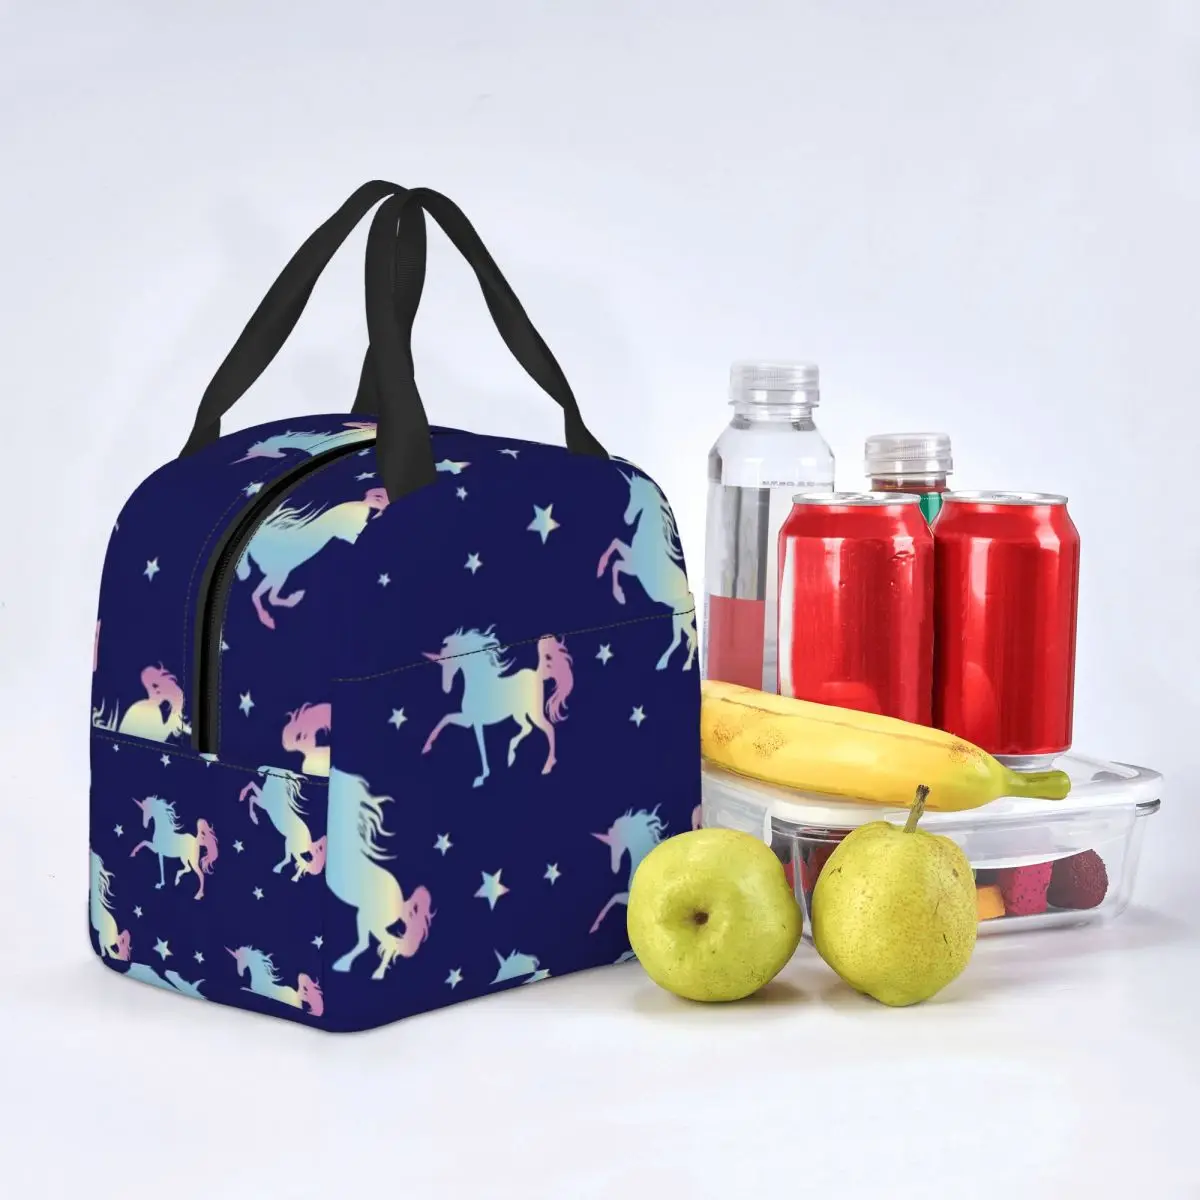 

Holographic Magic Unicorn Lunch Bag with Handle Cartoon Unicorns Lover Star Food Cooler Bag Elegant Cooling Work Thermal Bag